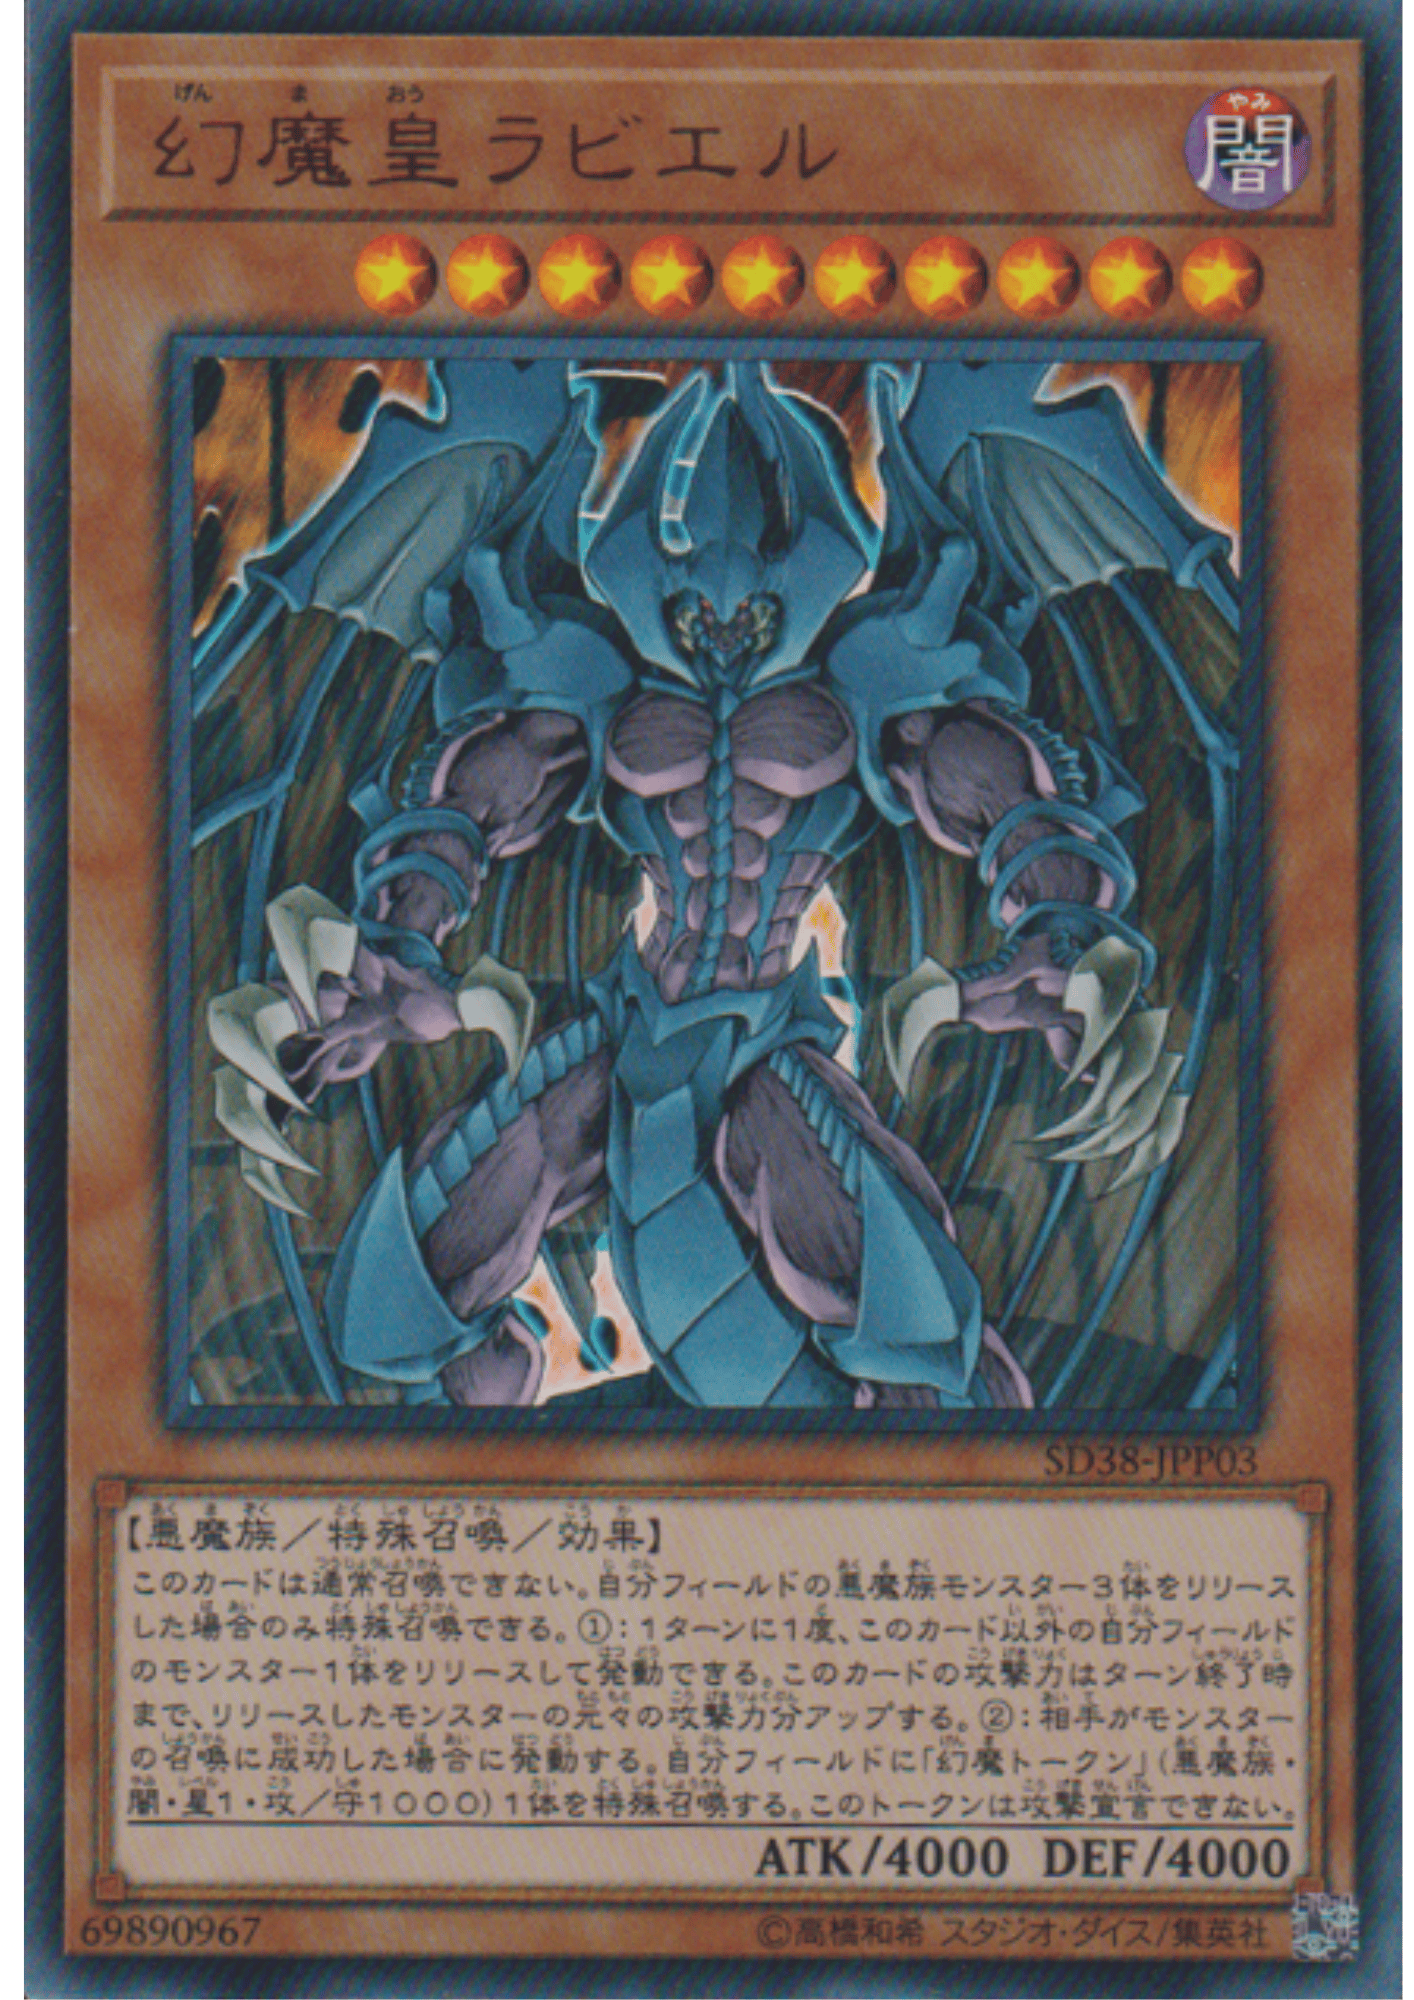 Raviel, Lord of Phantasms SD38-JPP03 | Sacred Beasts of Chaos